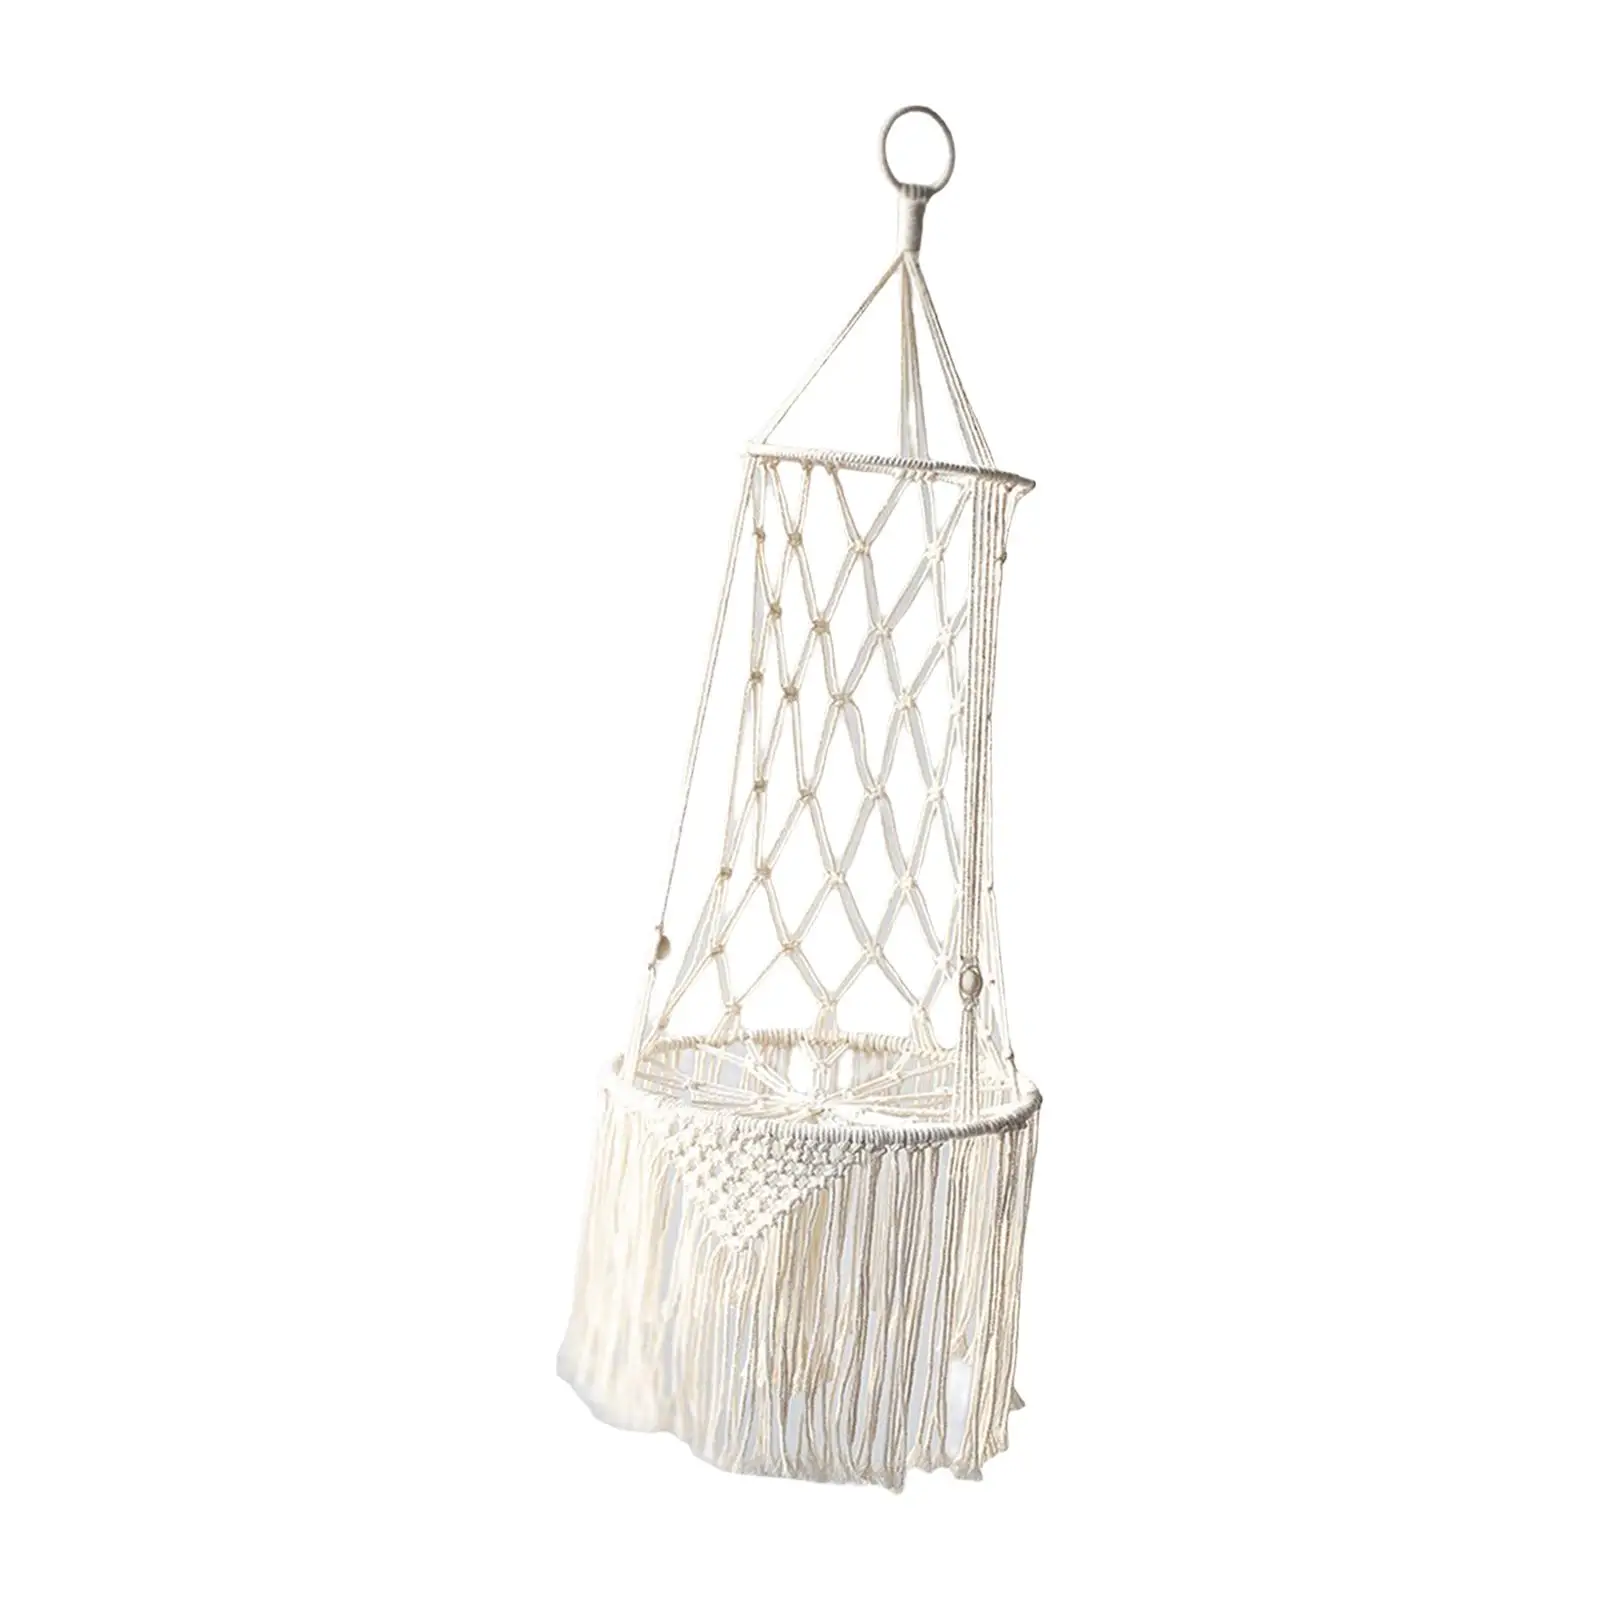 Cat Hammock Decoration Beige Tassel Cotton Rope House Basket Nest for Indoor Outdoor Garden